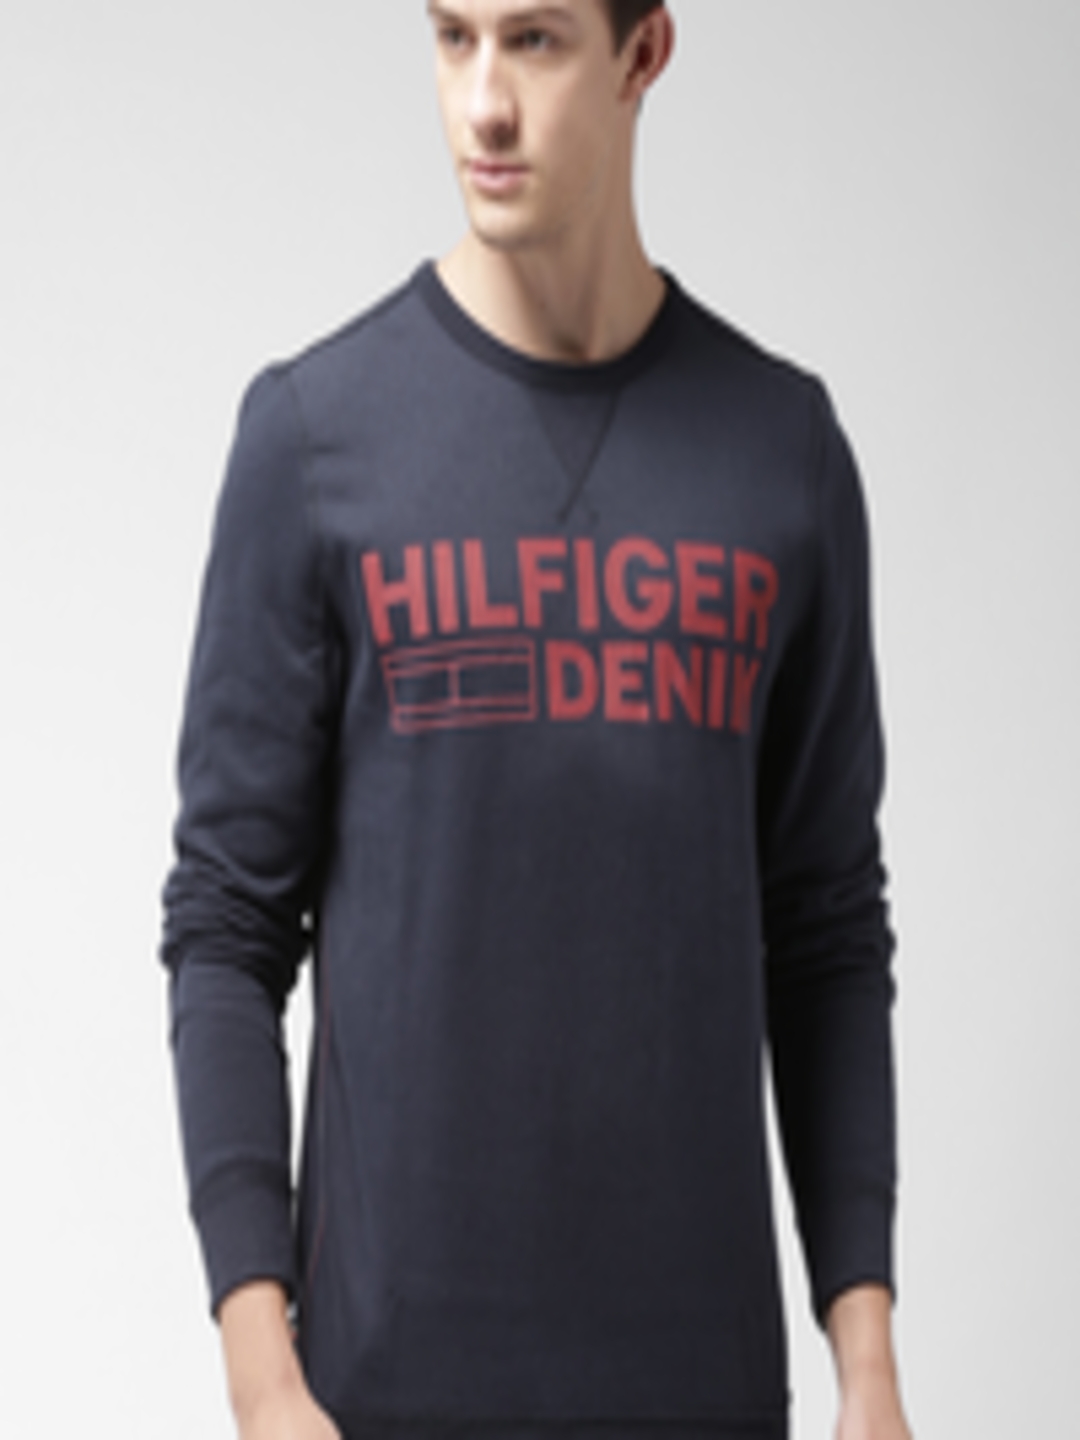 Buy Tommy Hilfiger Men Navy Blue Printed Sweatshirt - Sweatshirts for ...